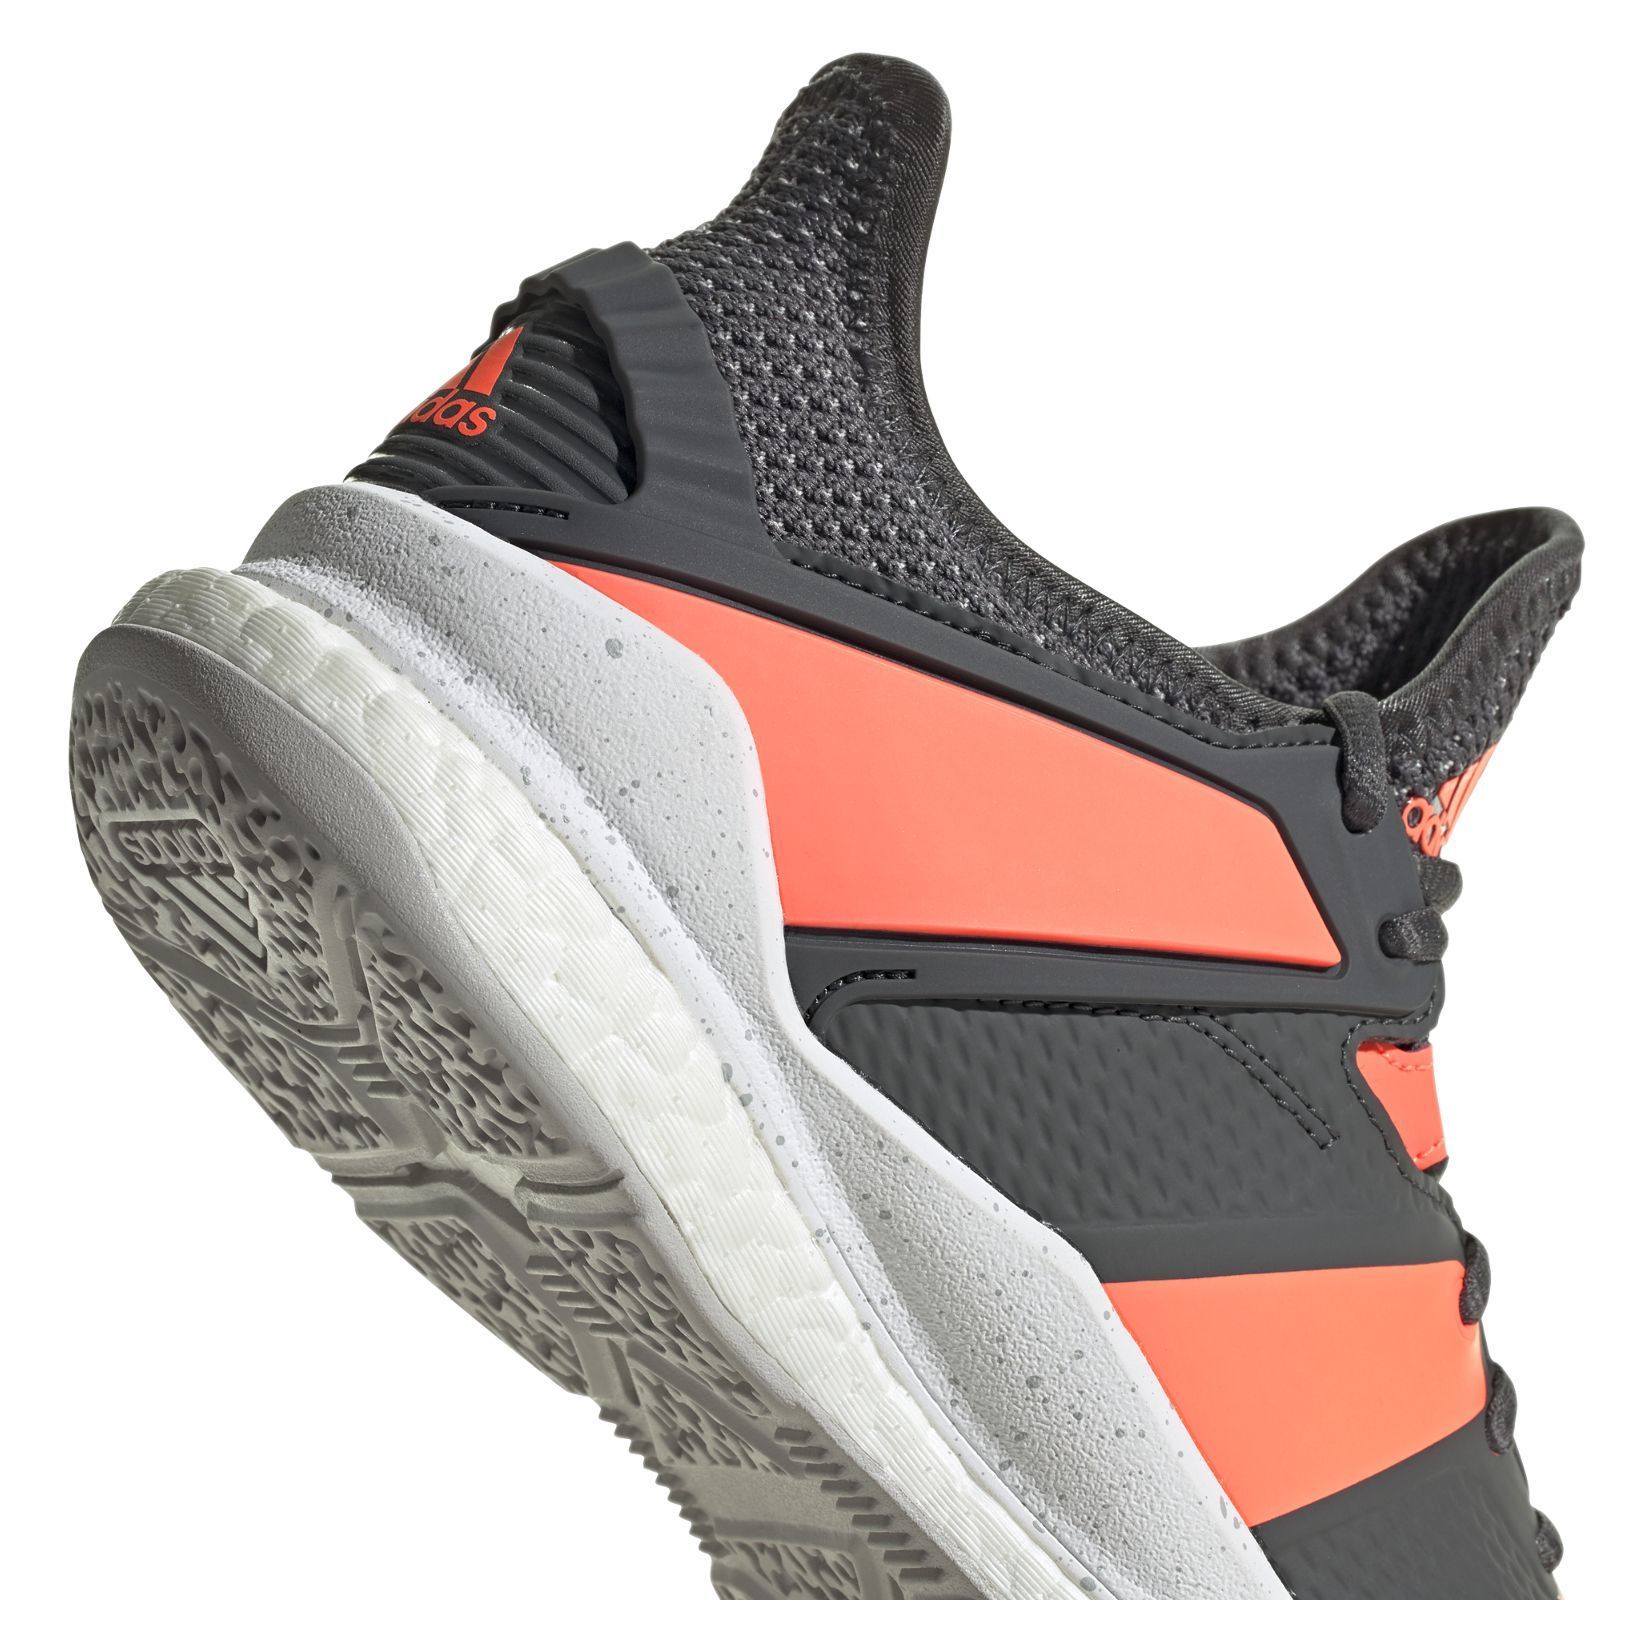 Adidas-LP Stabil X Court Shoes